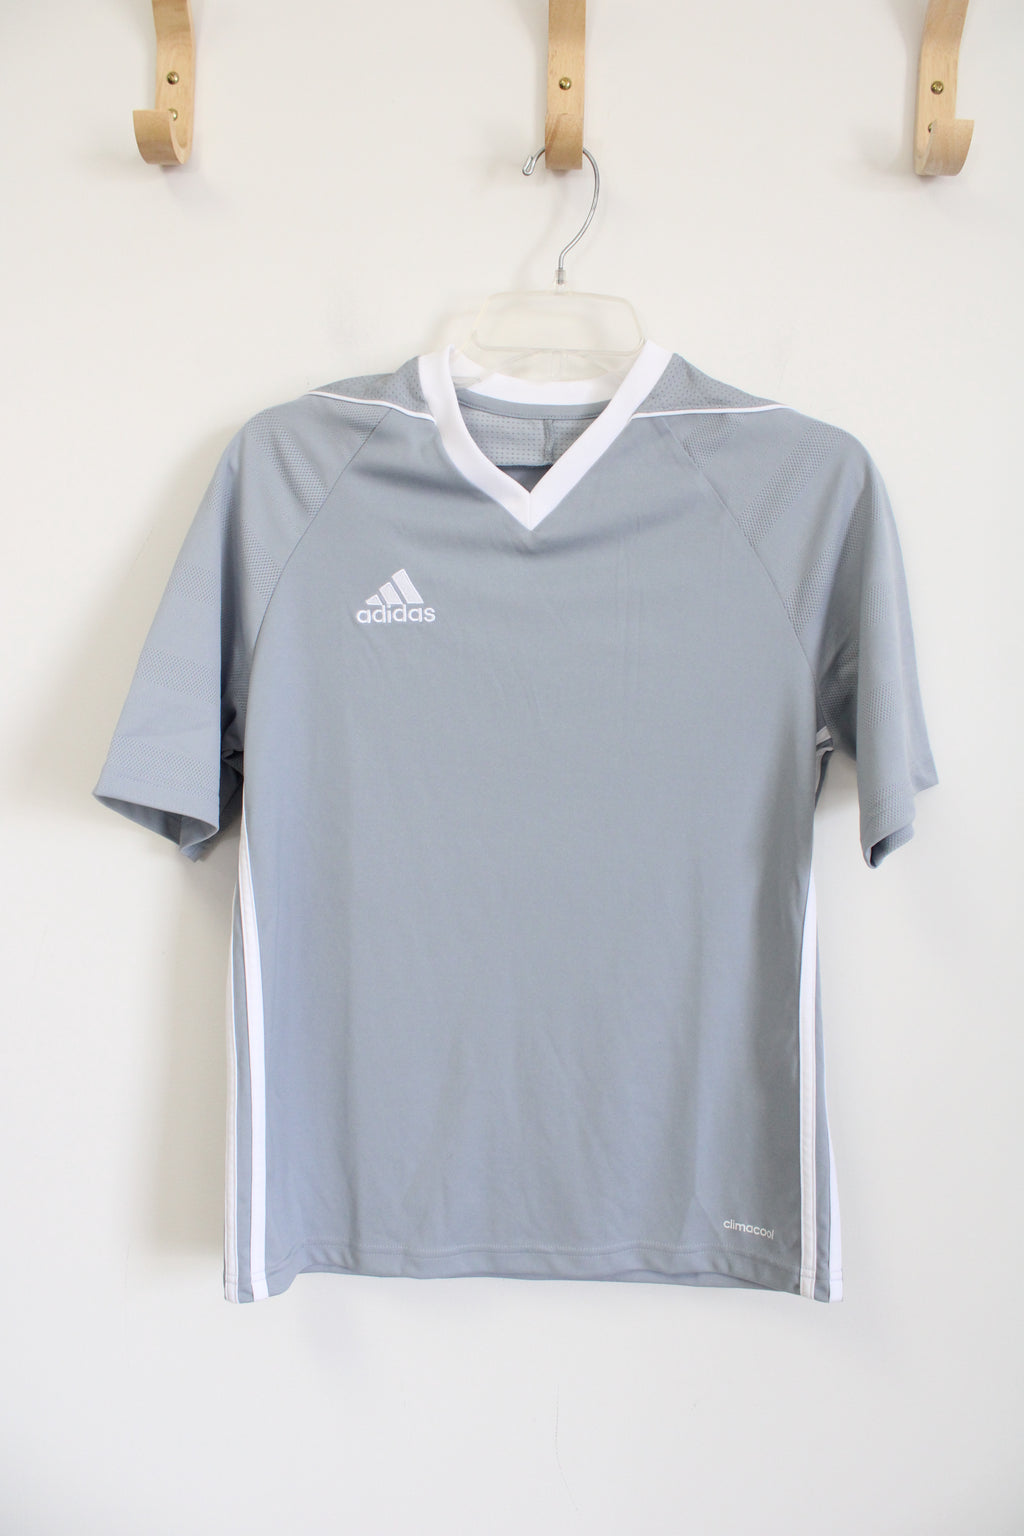 Adidas ClimaCool Gray Jersey Shirt | 18